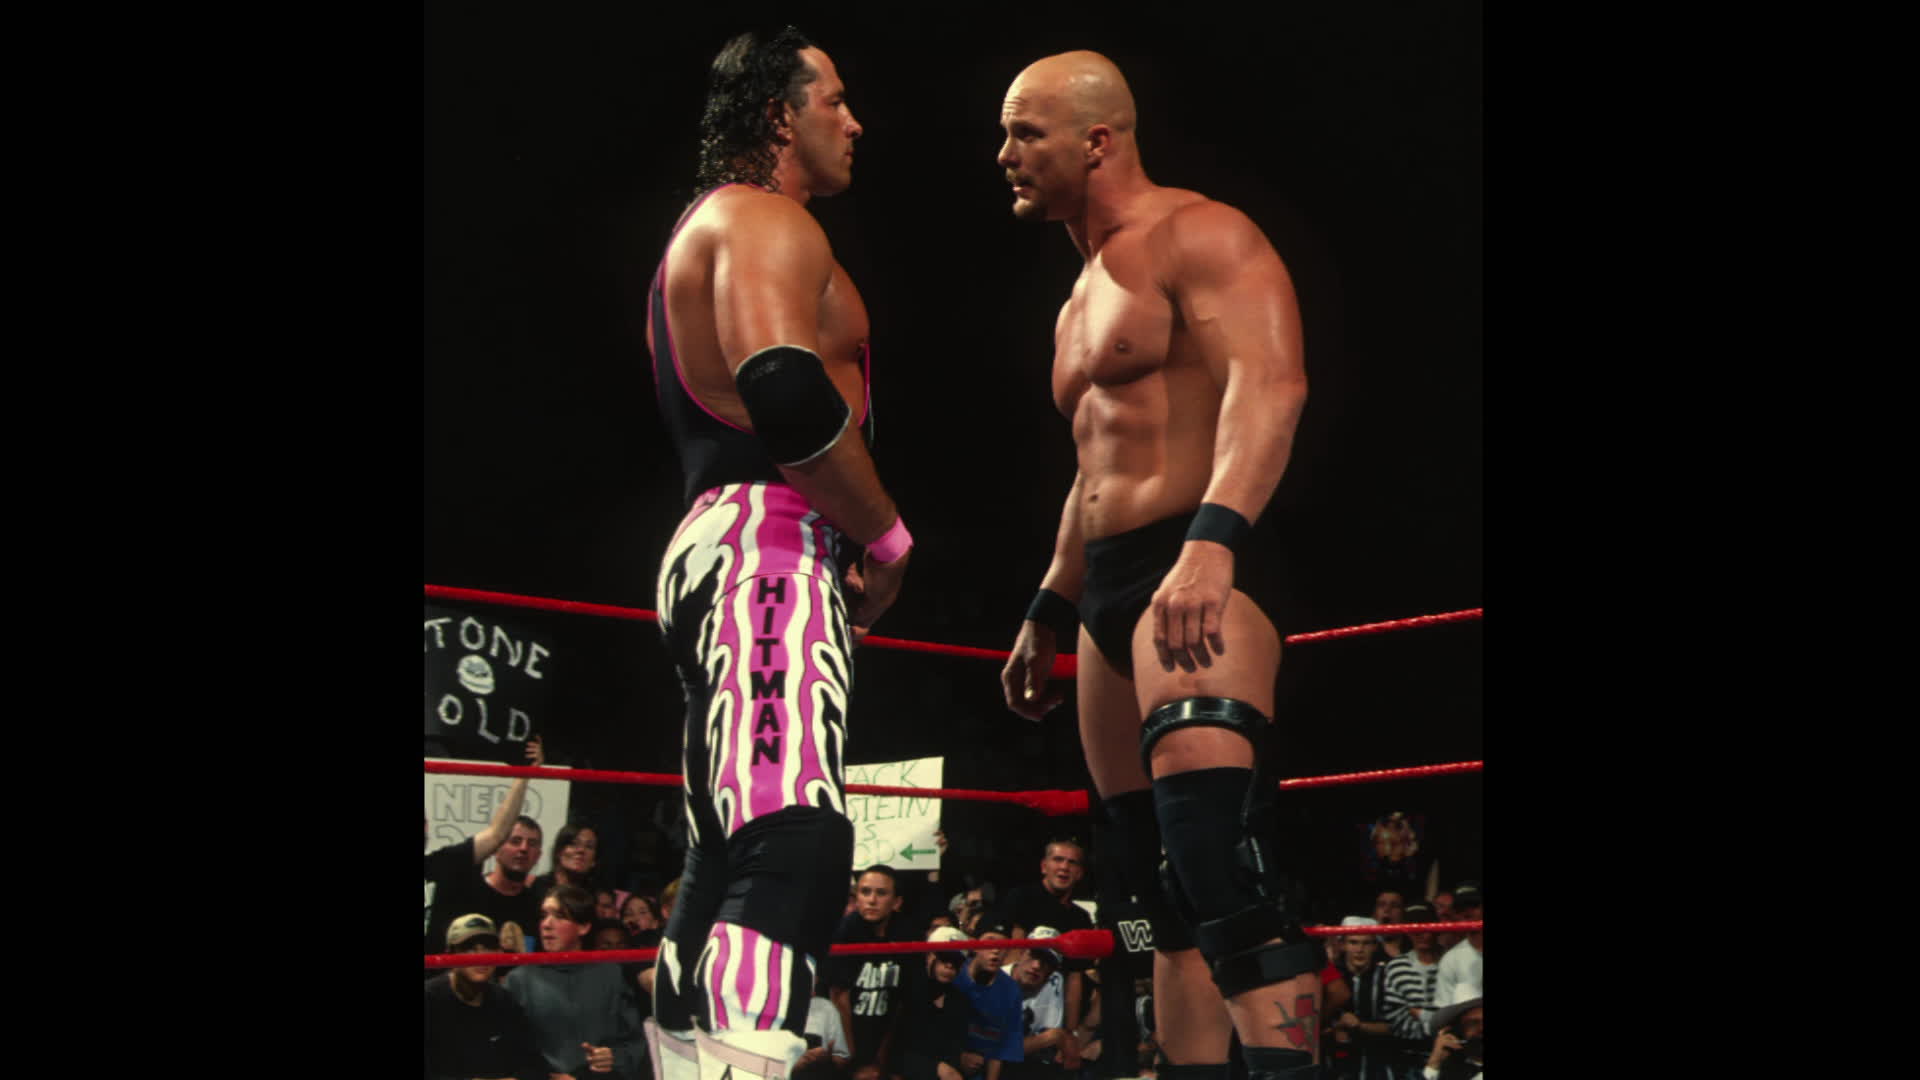 "Stone Cold" Steve Austin vs. Bret "Hitman" Hart